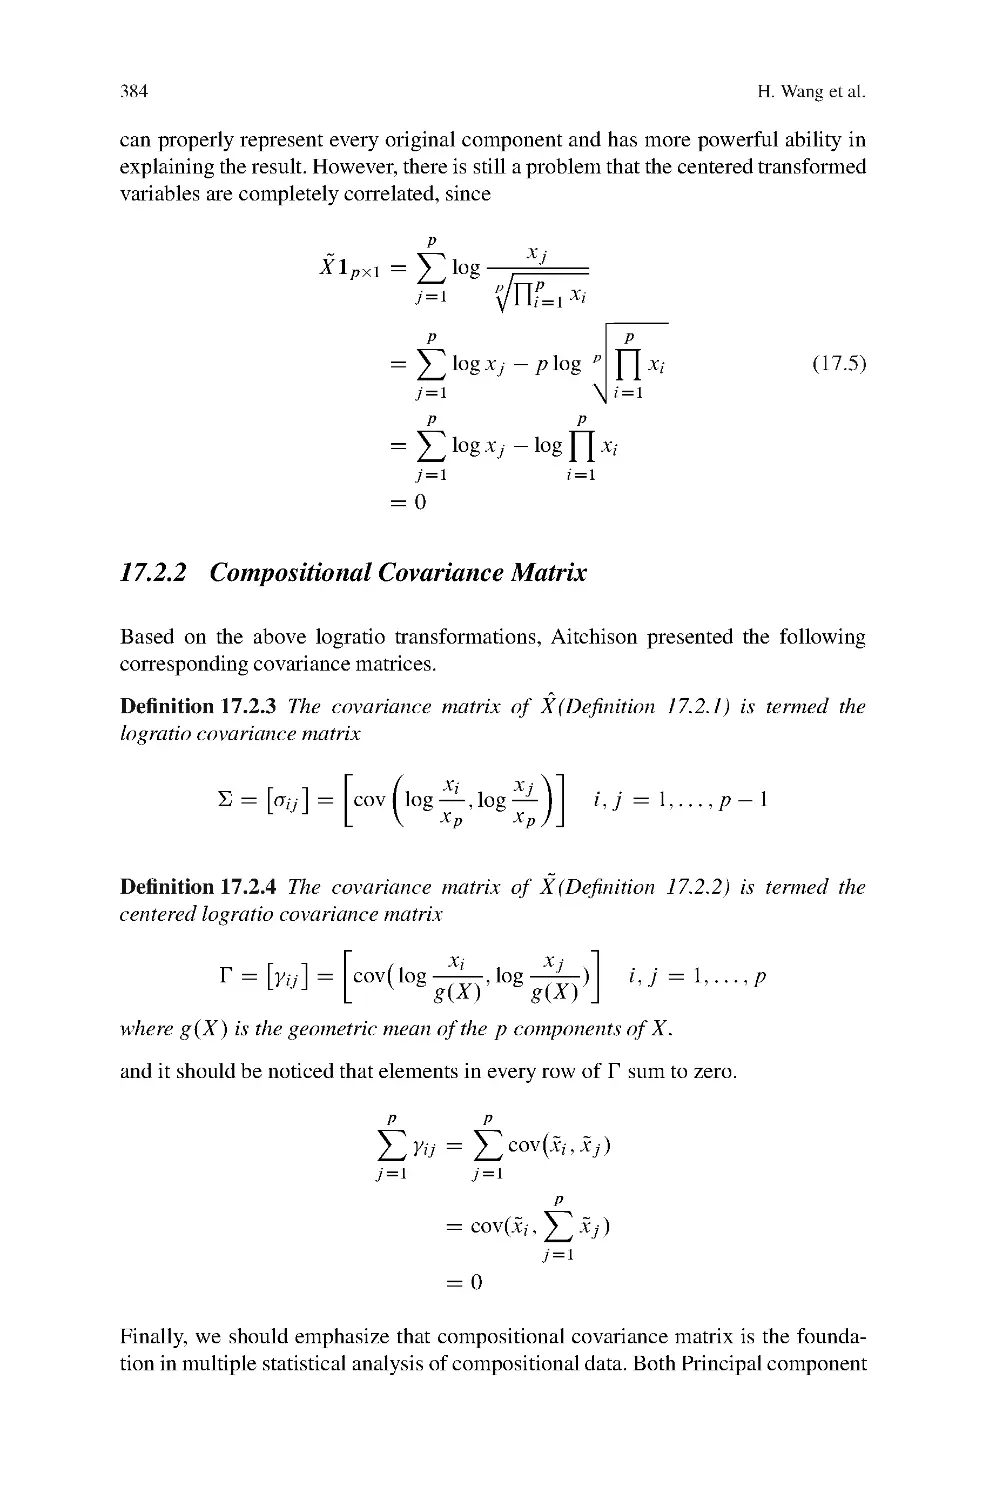 17.2.2 Compositional Covariance Matrix